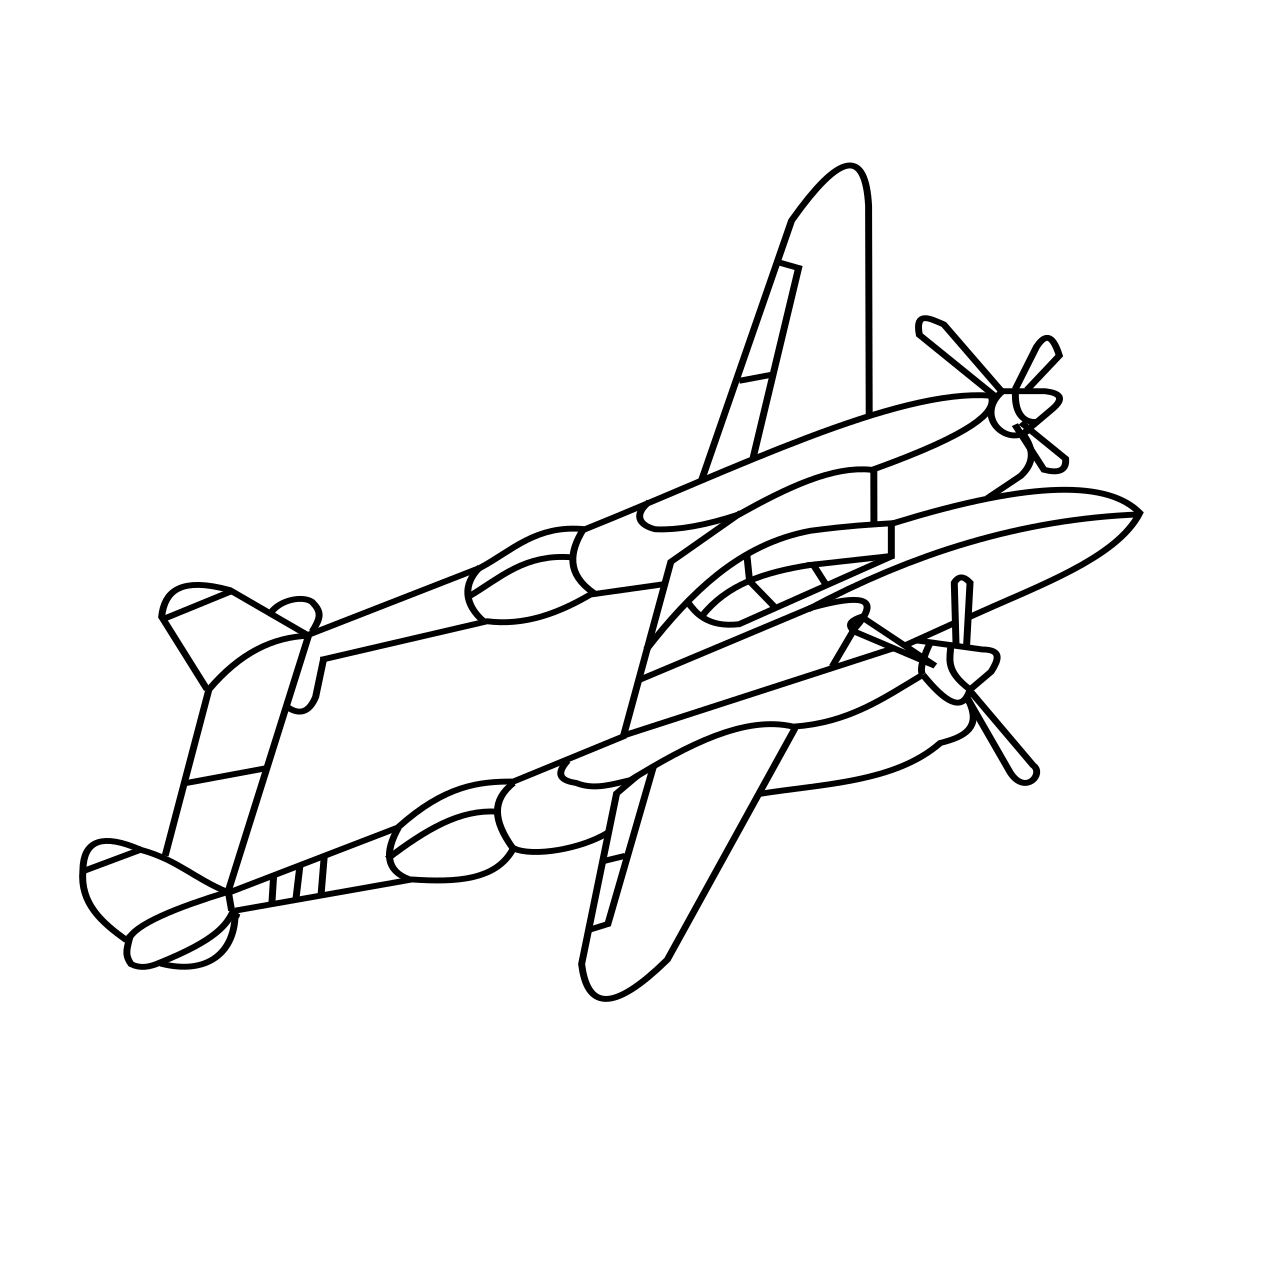 Omalovnka p-38 Lightning k vytisknut na A4